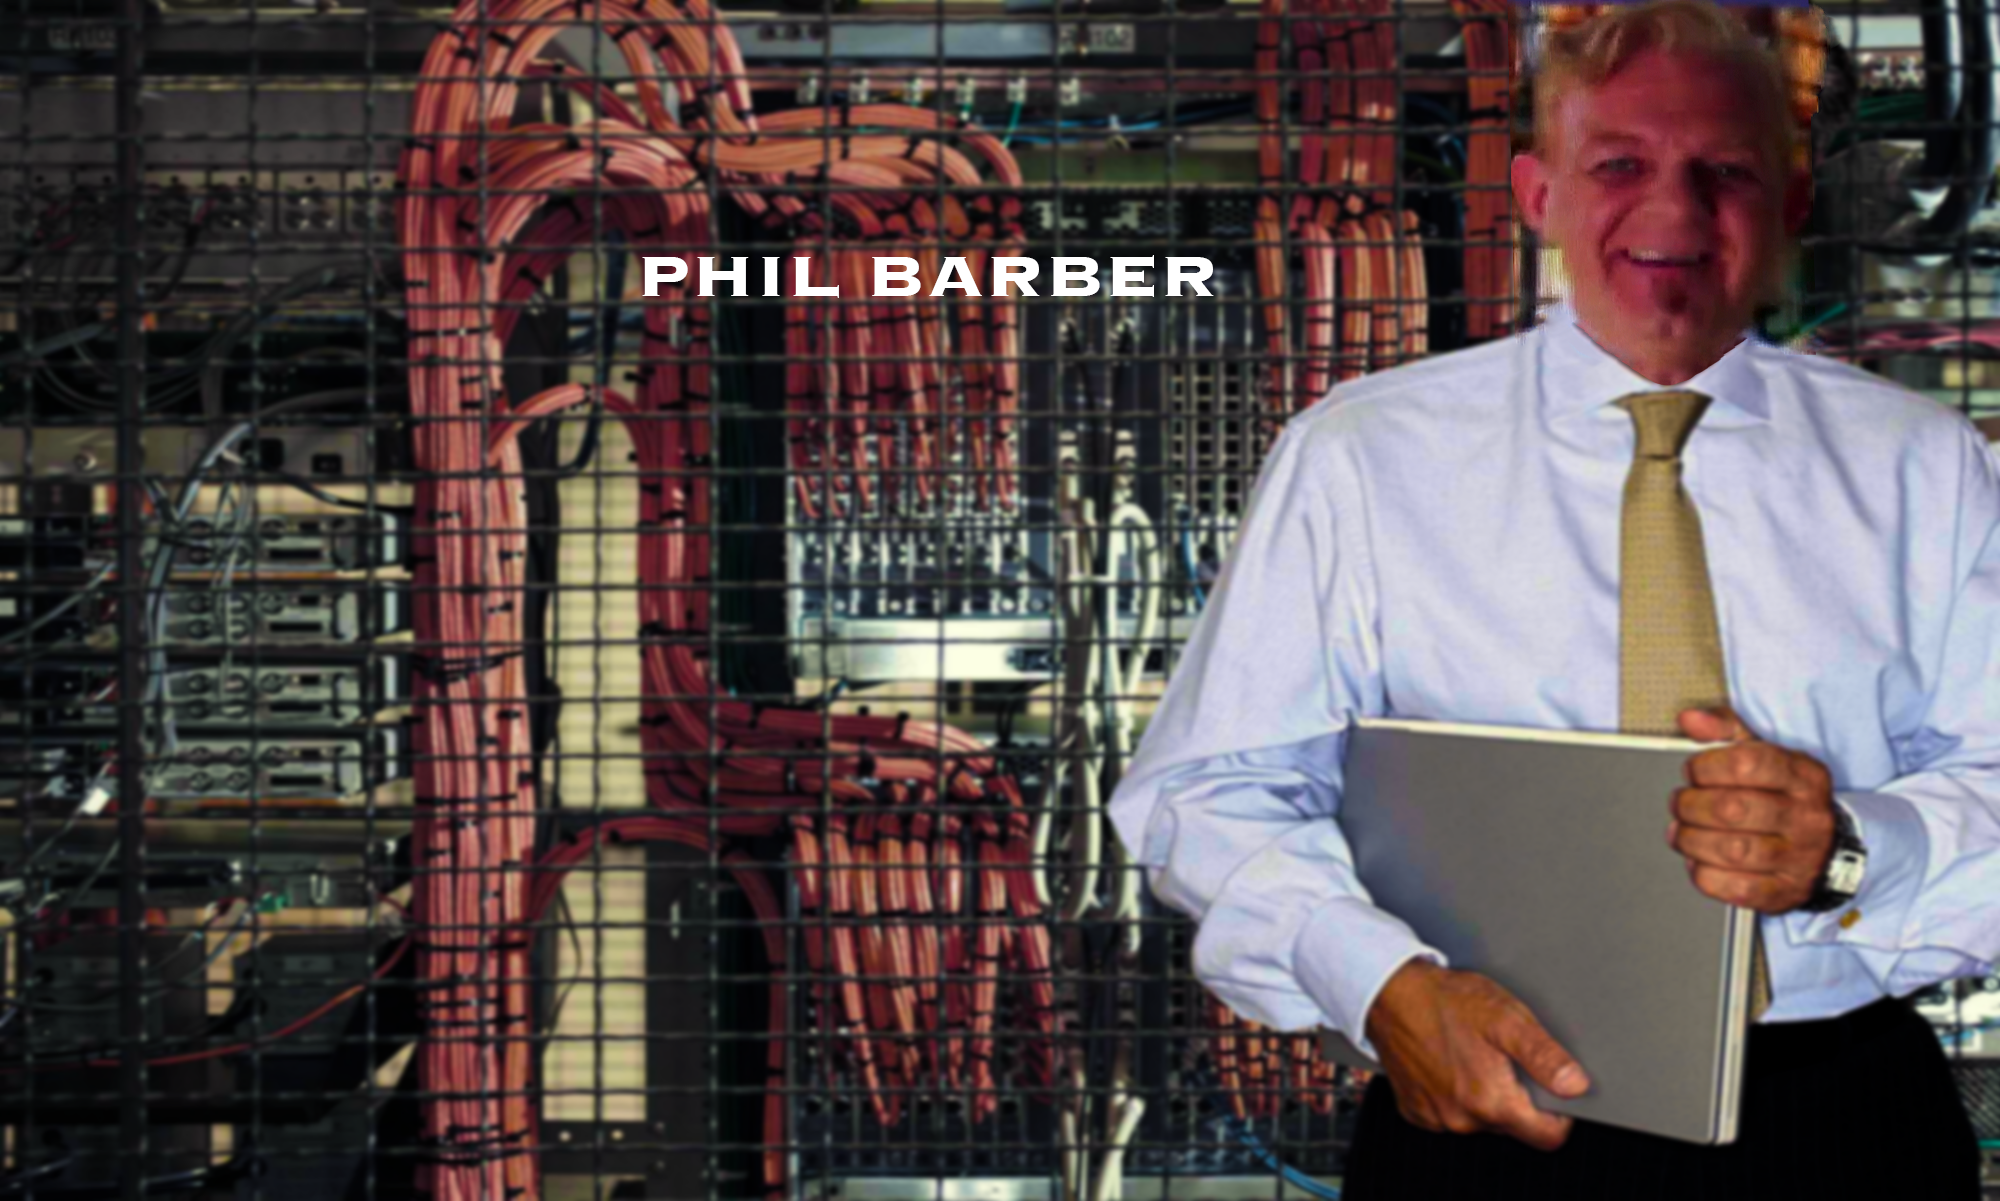 Phil Barber